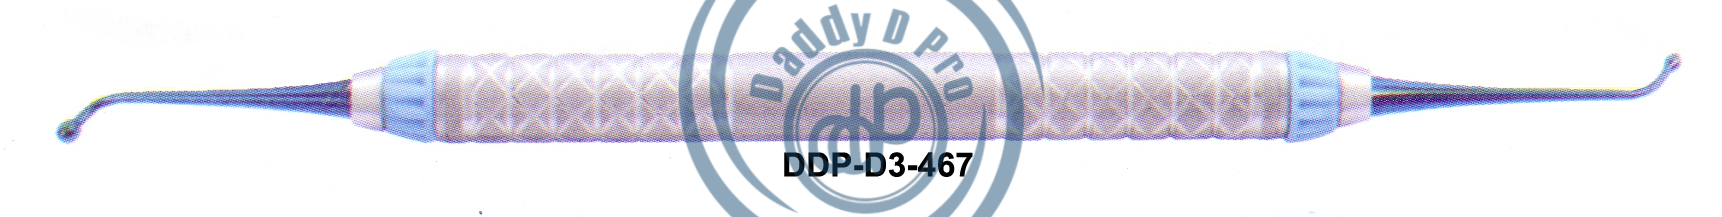 images/DDP-D3-467.png